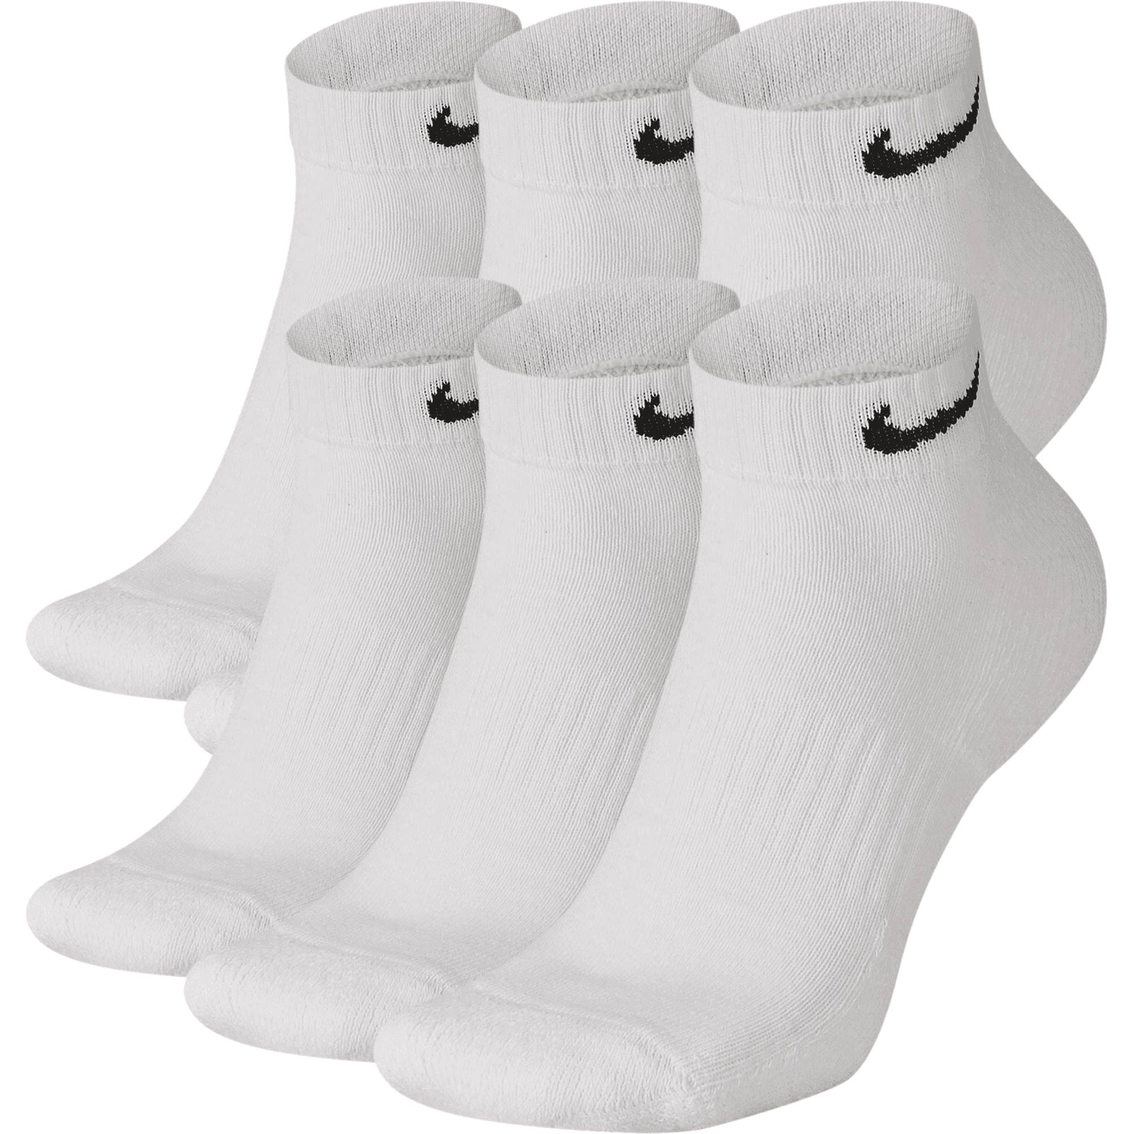 Nike Low Cut Socks 6 Pk. | Socks | Clothing & Accessories | Shop The ...